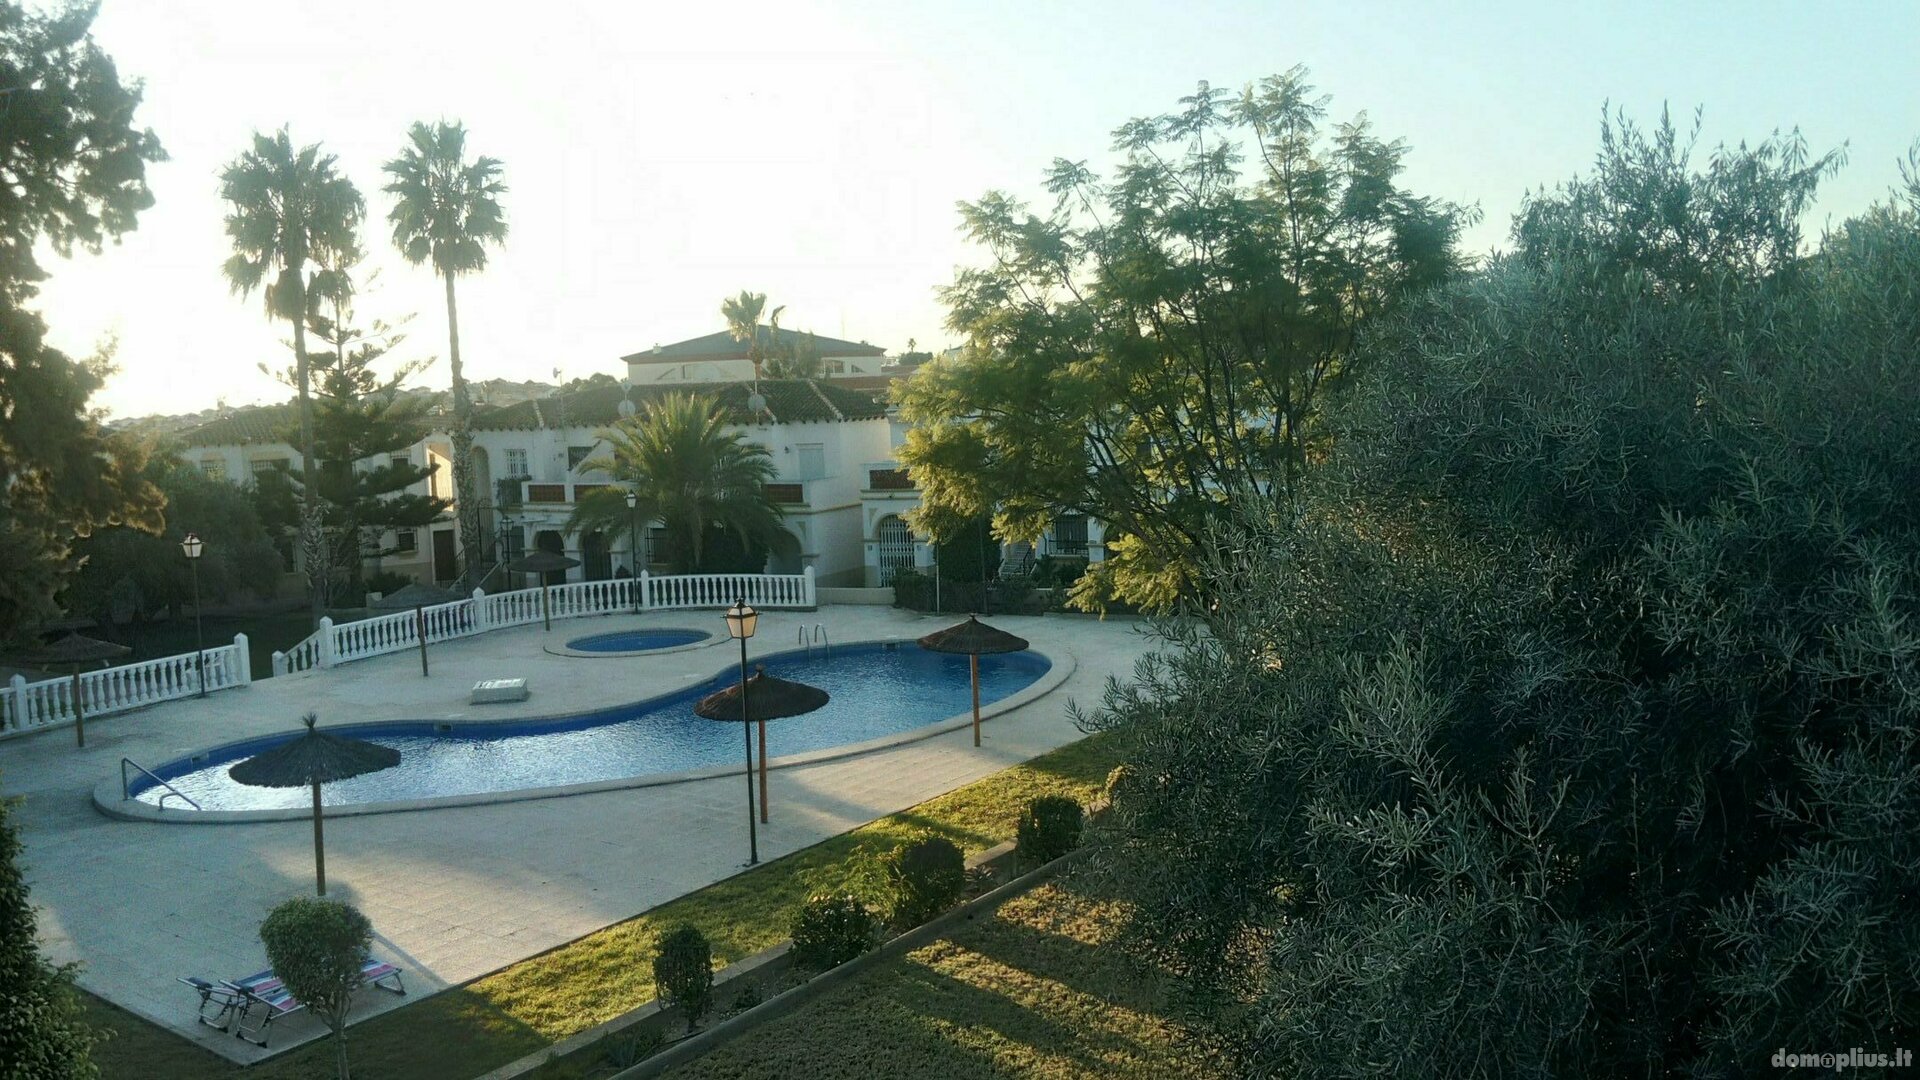 2 rooms apartment for rent Spain, San MIguel de Salinas